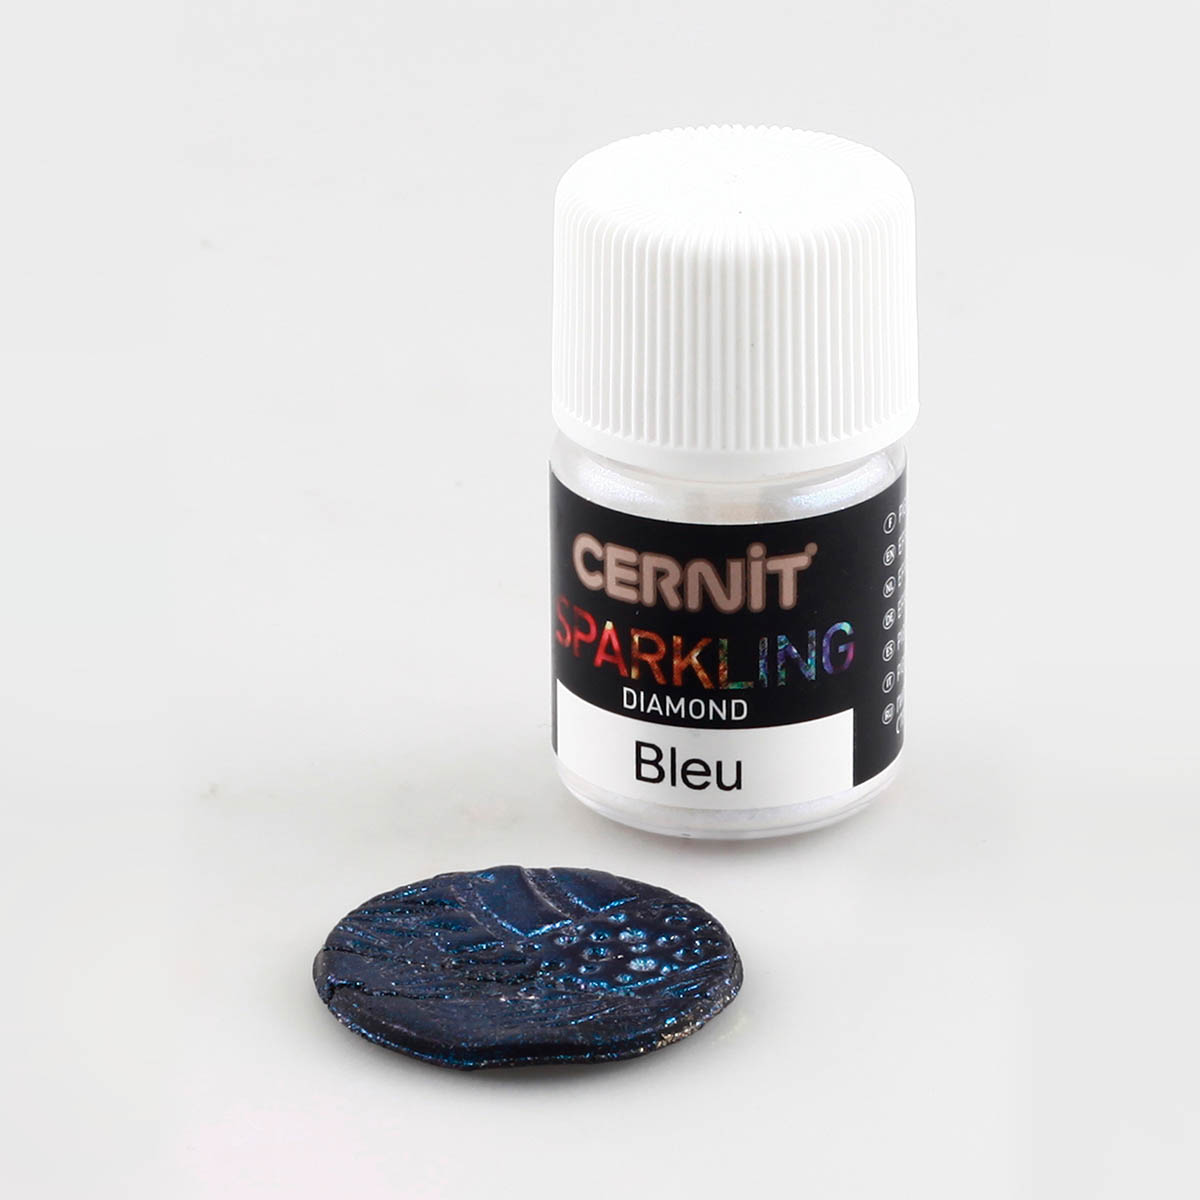 CE6120005 Мика-порошок (слюда) Cernit Diamond SPARKLING POWDER голубой, 5 г порошок графитовый hanseline graphite powder 40 г hans 303507